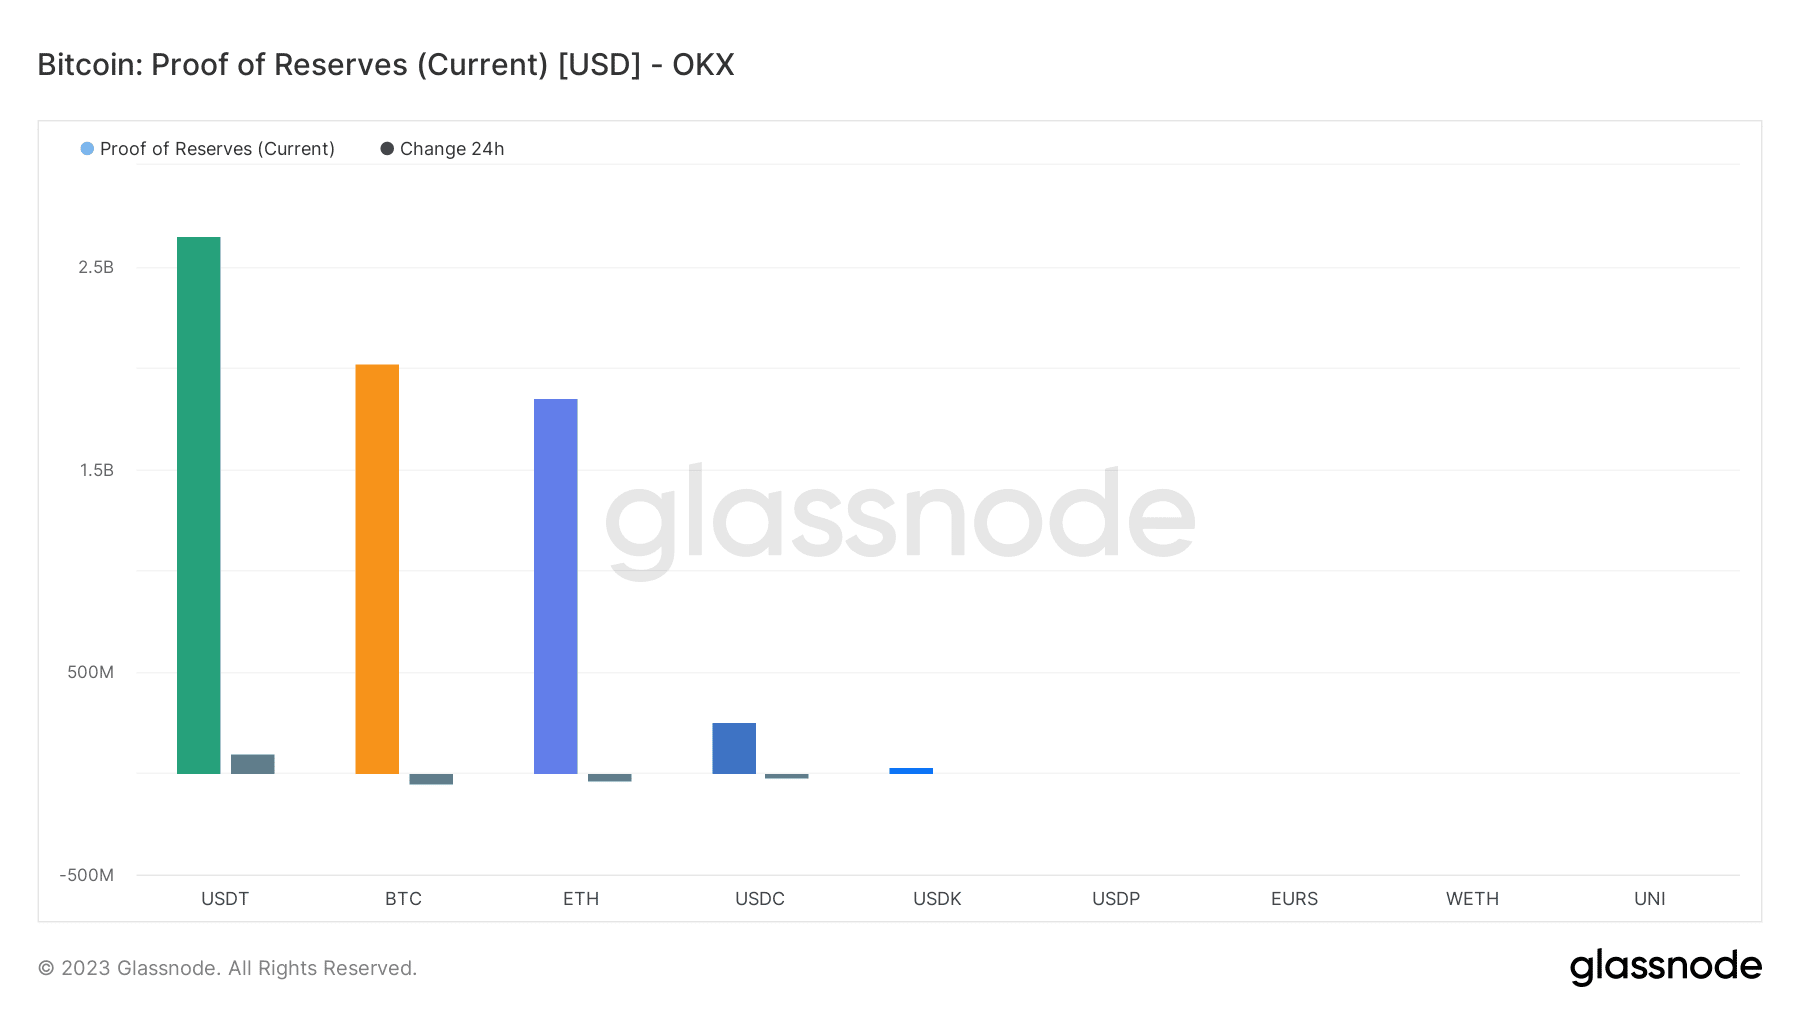 OKX Proof of Reserves - (Source: Glassnode.com)